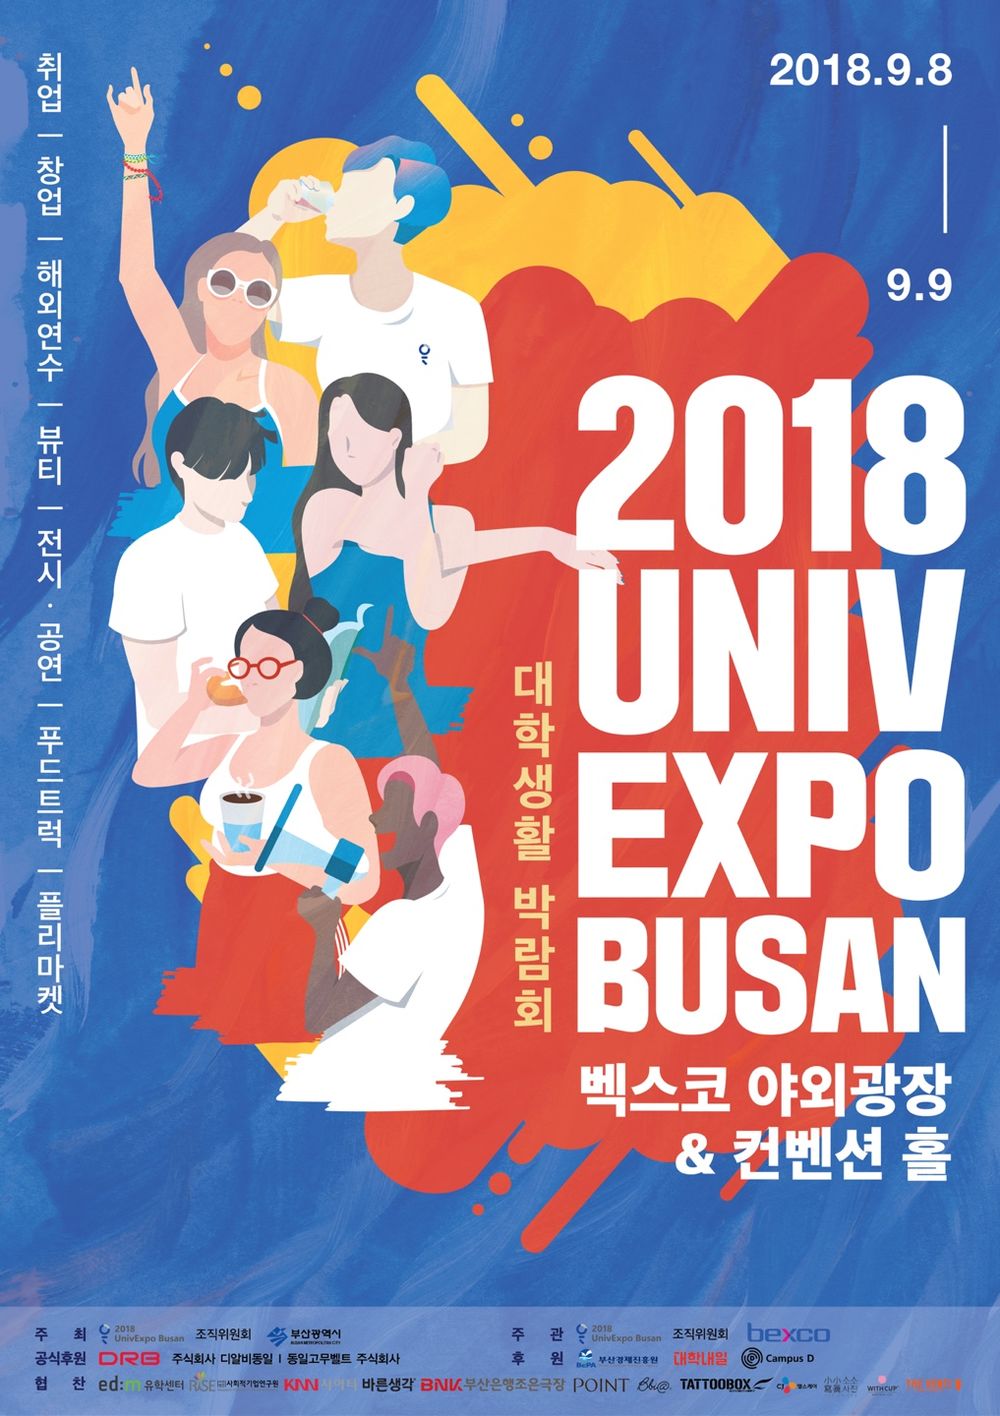 1536113275161.jpg : ????2018 UnivExpo Busan 본 행사 홍보????